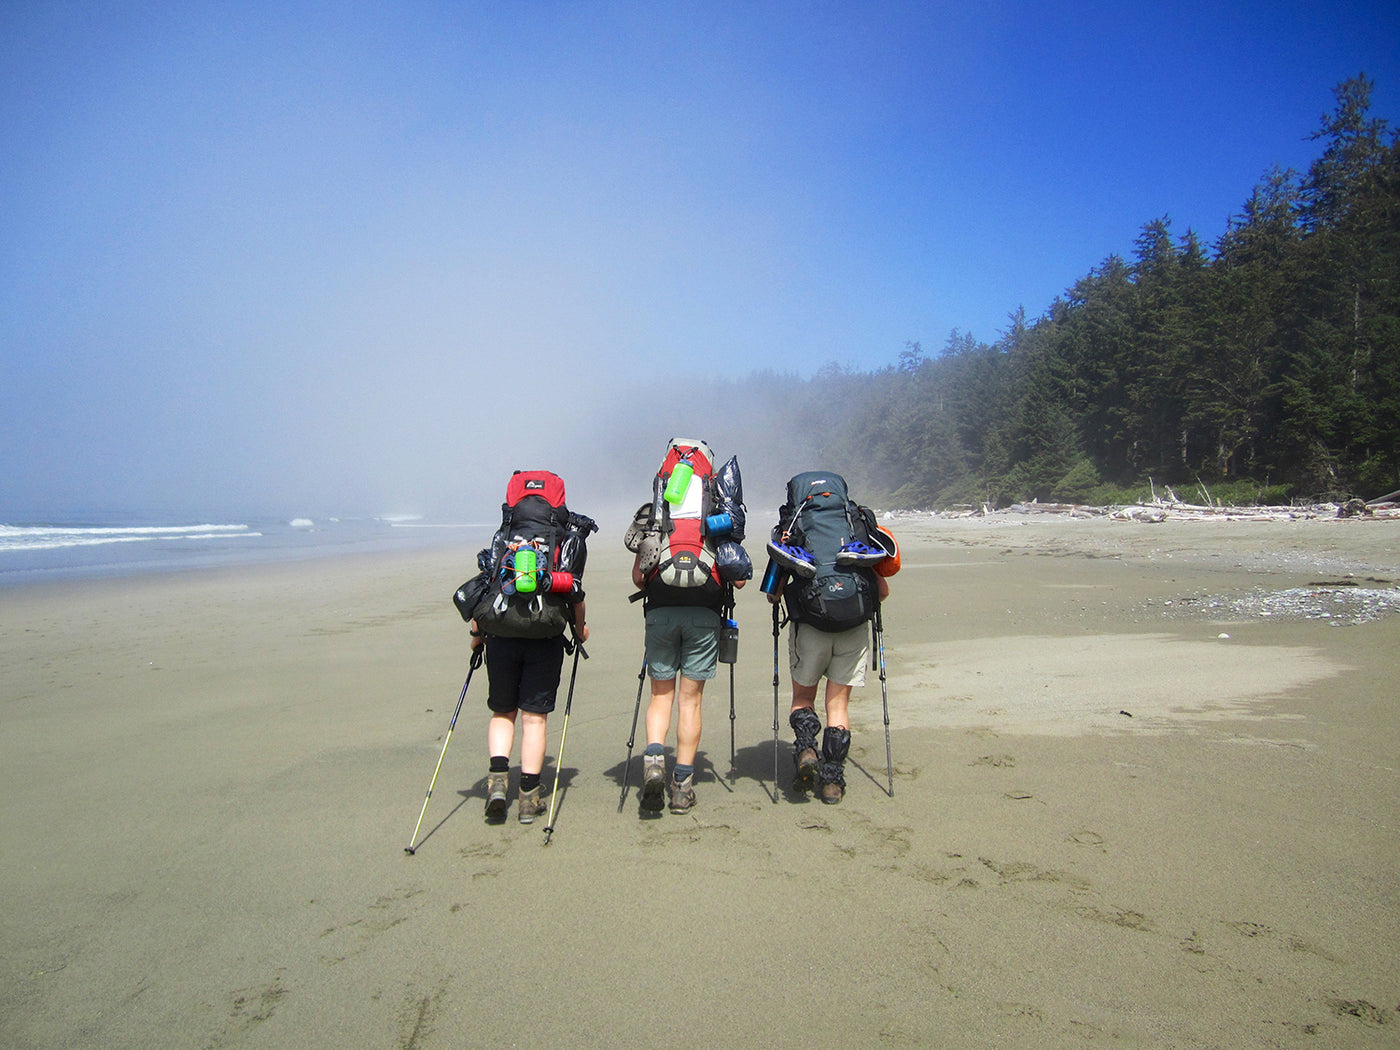 Hiking Adventure three hikers walking along a beach carrying rucksacks wearing a Ruffnek snood - West Coast Trail, Canada